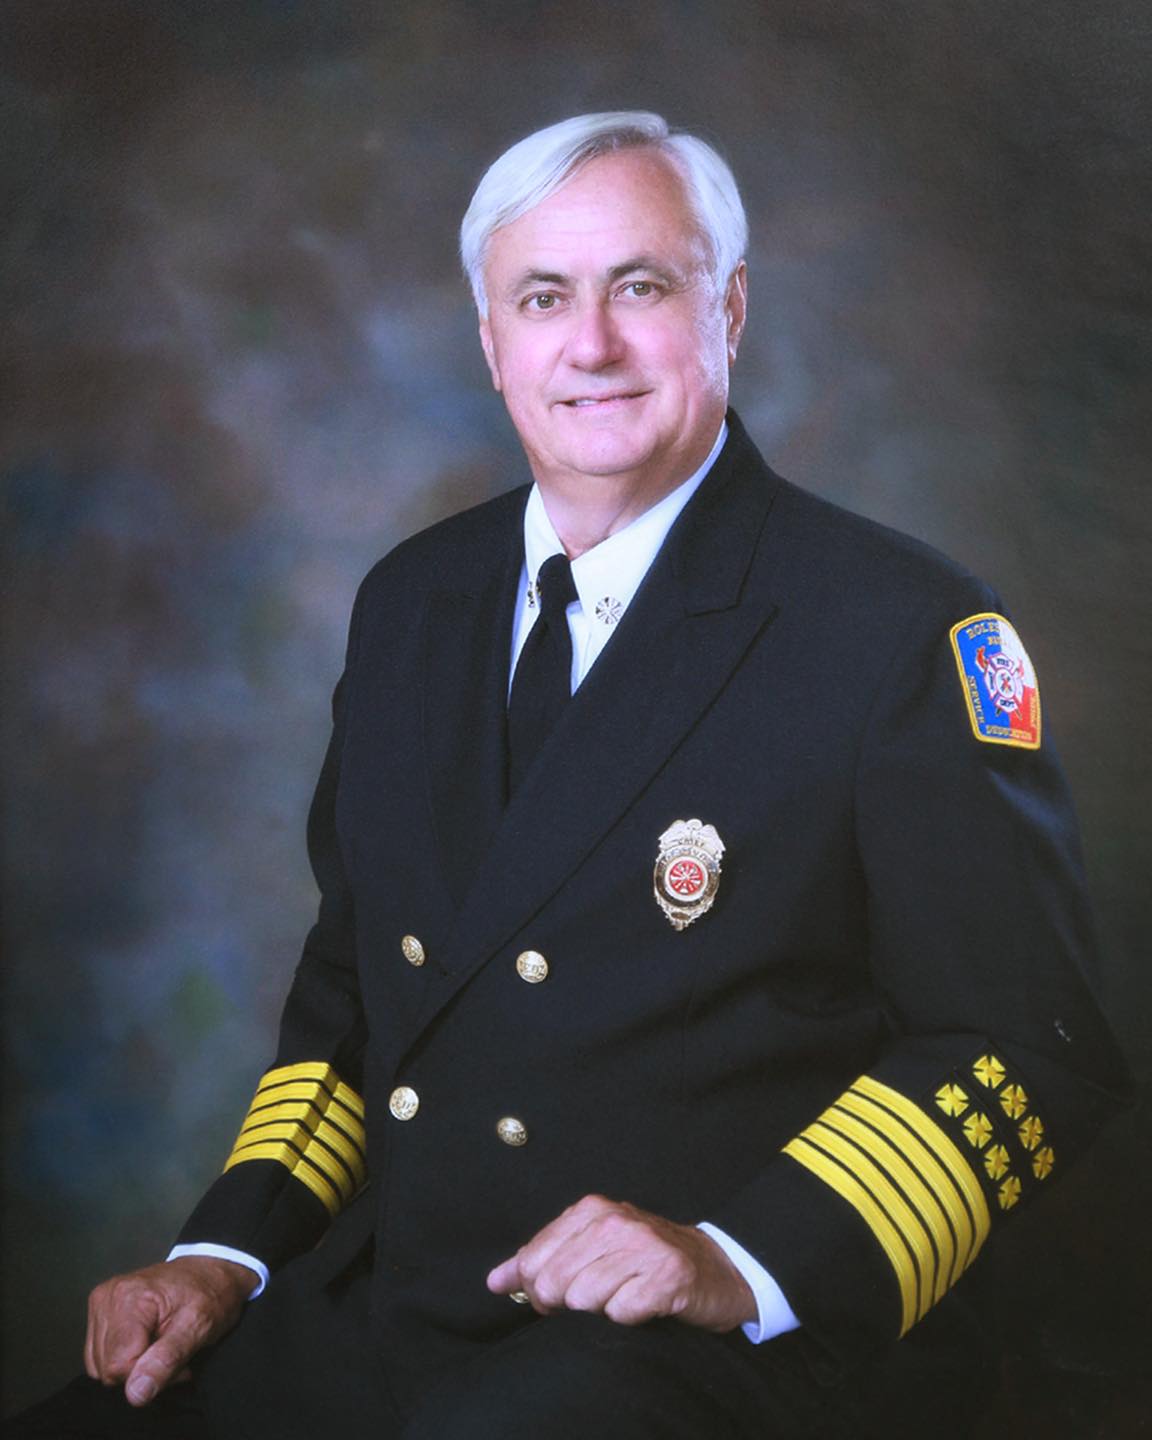 Chief Rodney Privette in his dress uniform